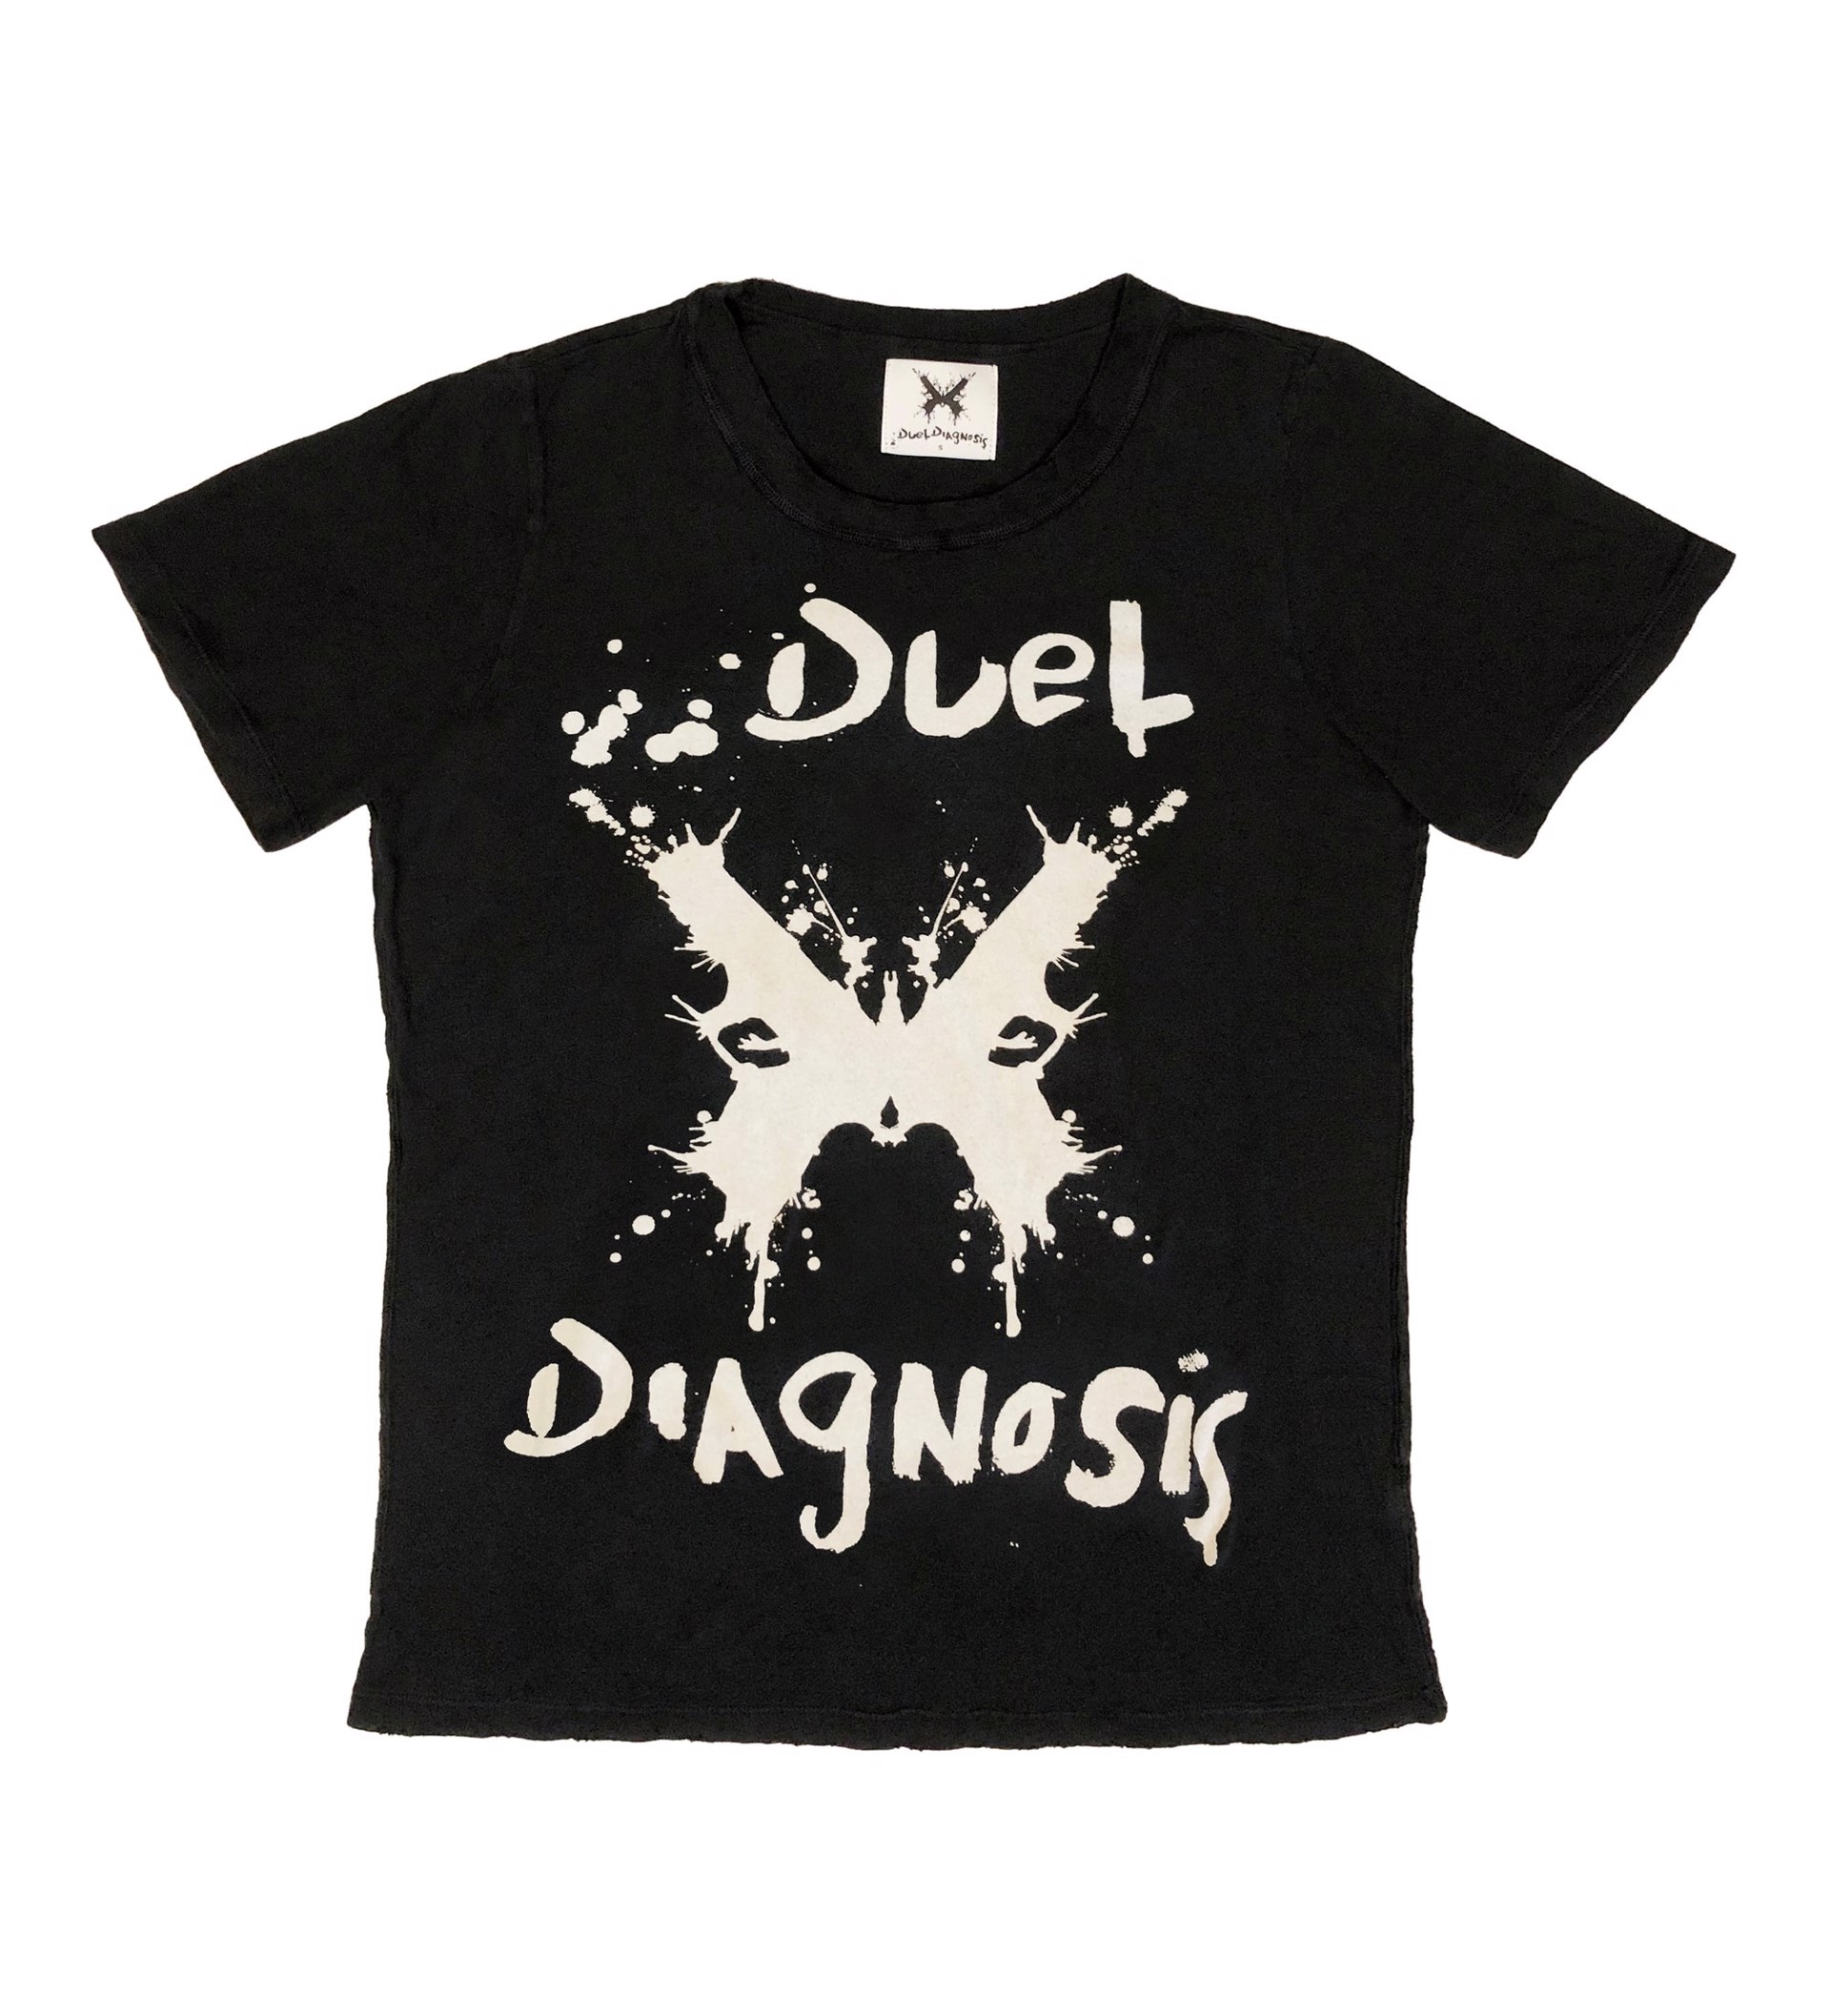 Duel Diagnosis Emblem T Shirt- Extra Large by Duel Diagnosis